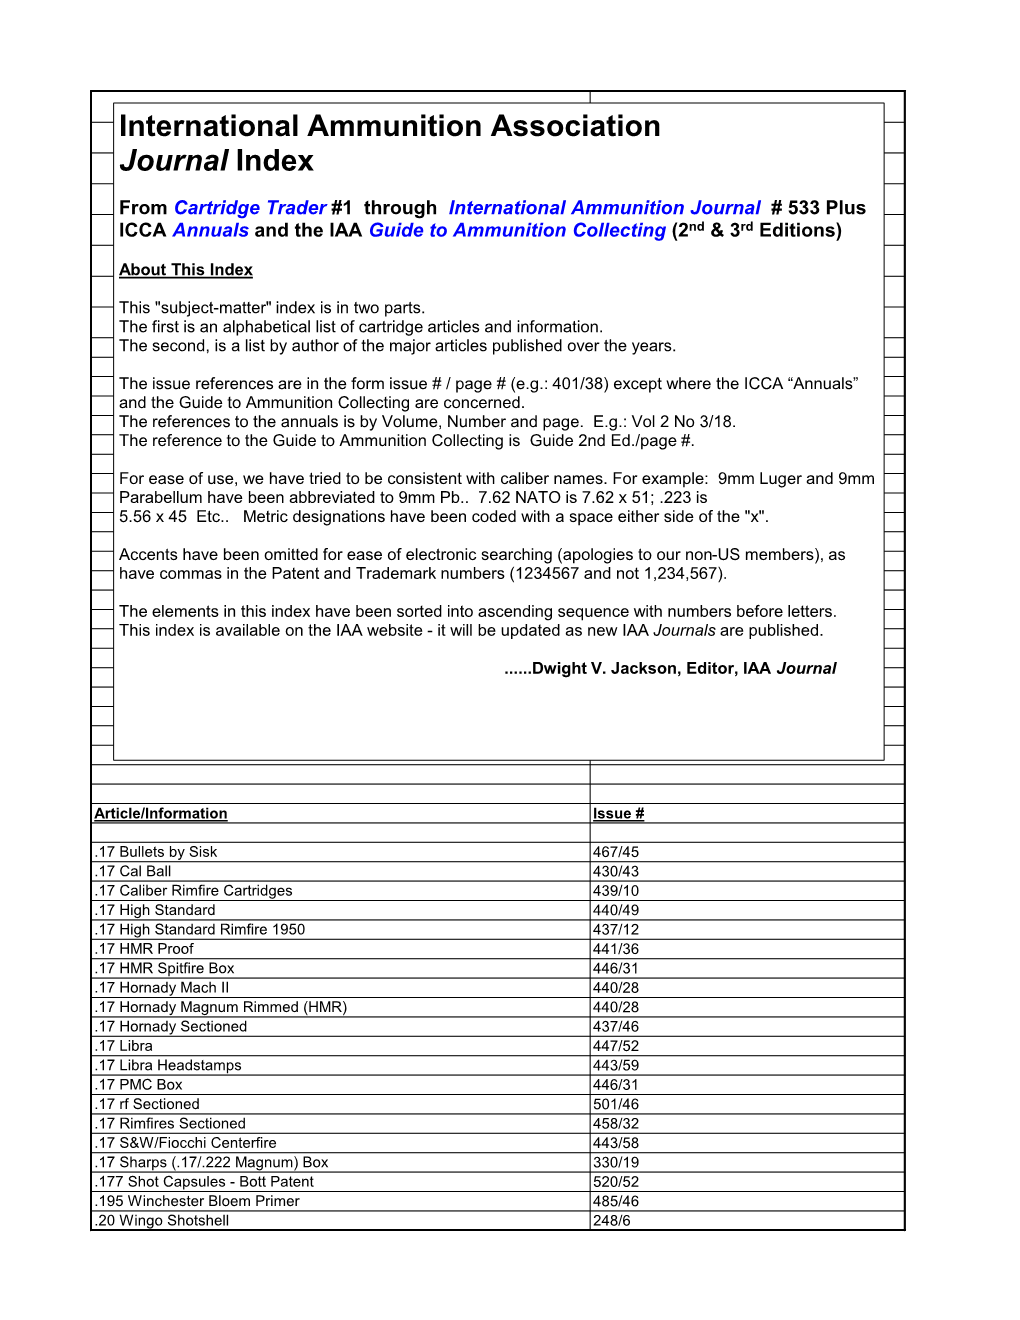 Cumulative Index of the the International Ammunition Journal